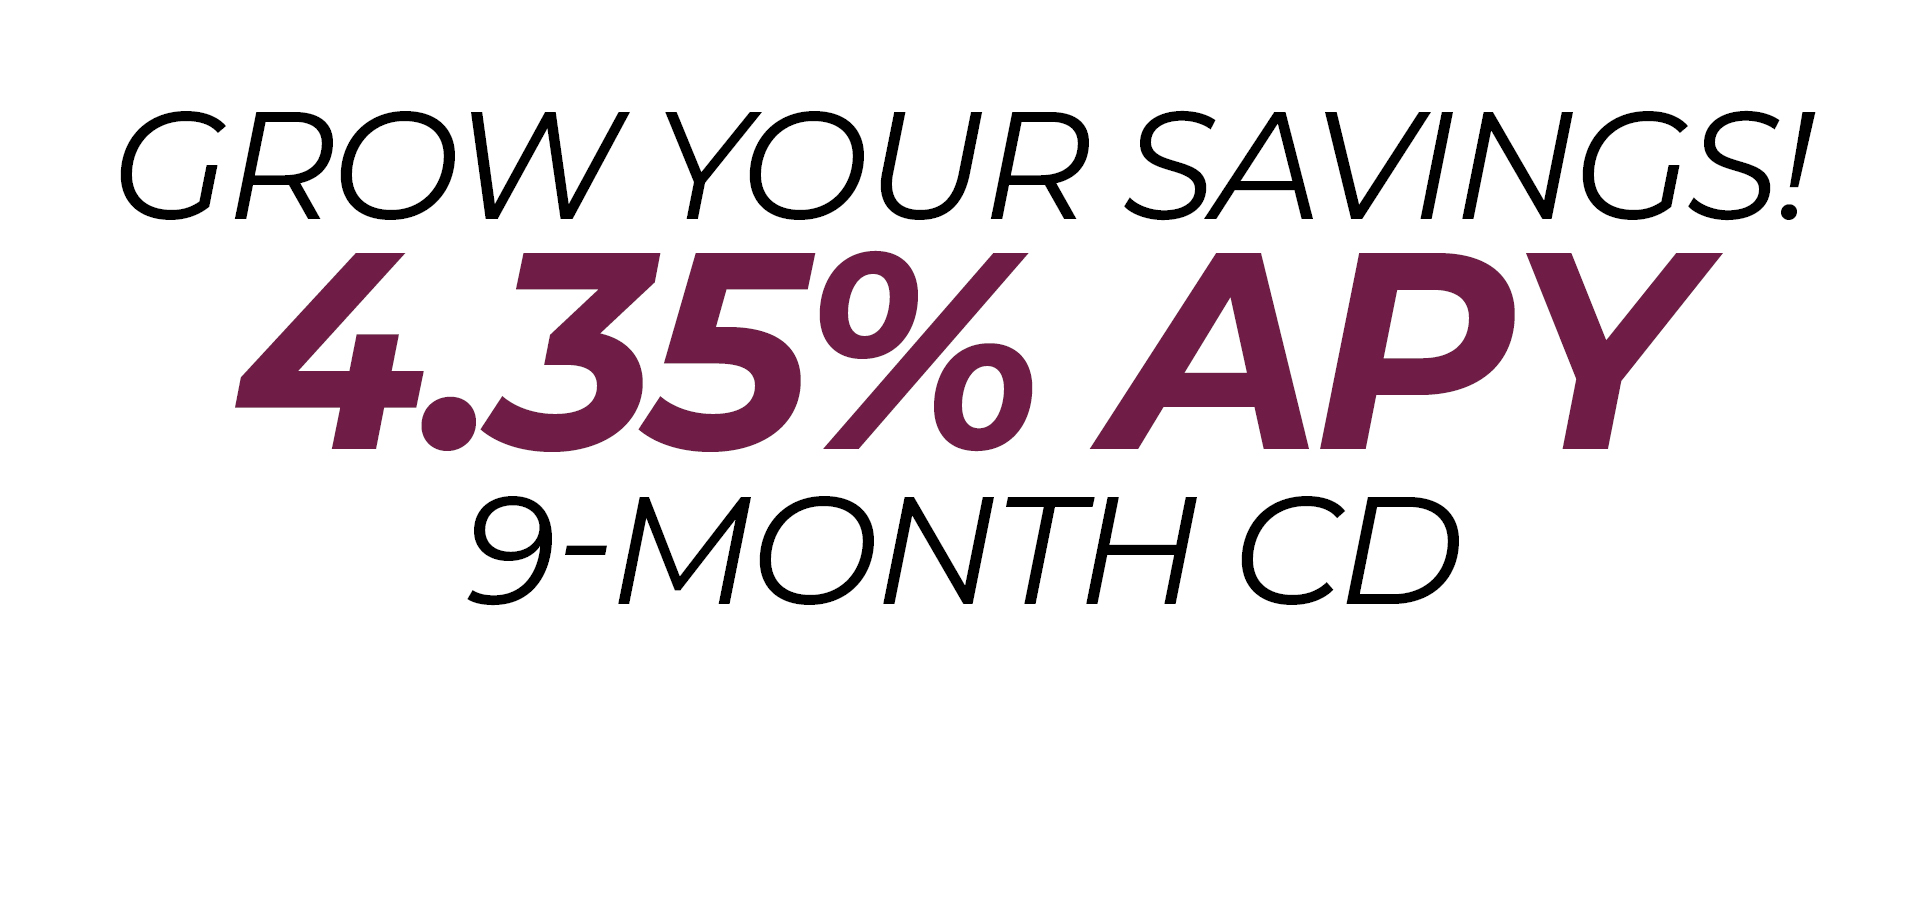 Grow your savings! 4.35% APY 9-Month CD